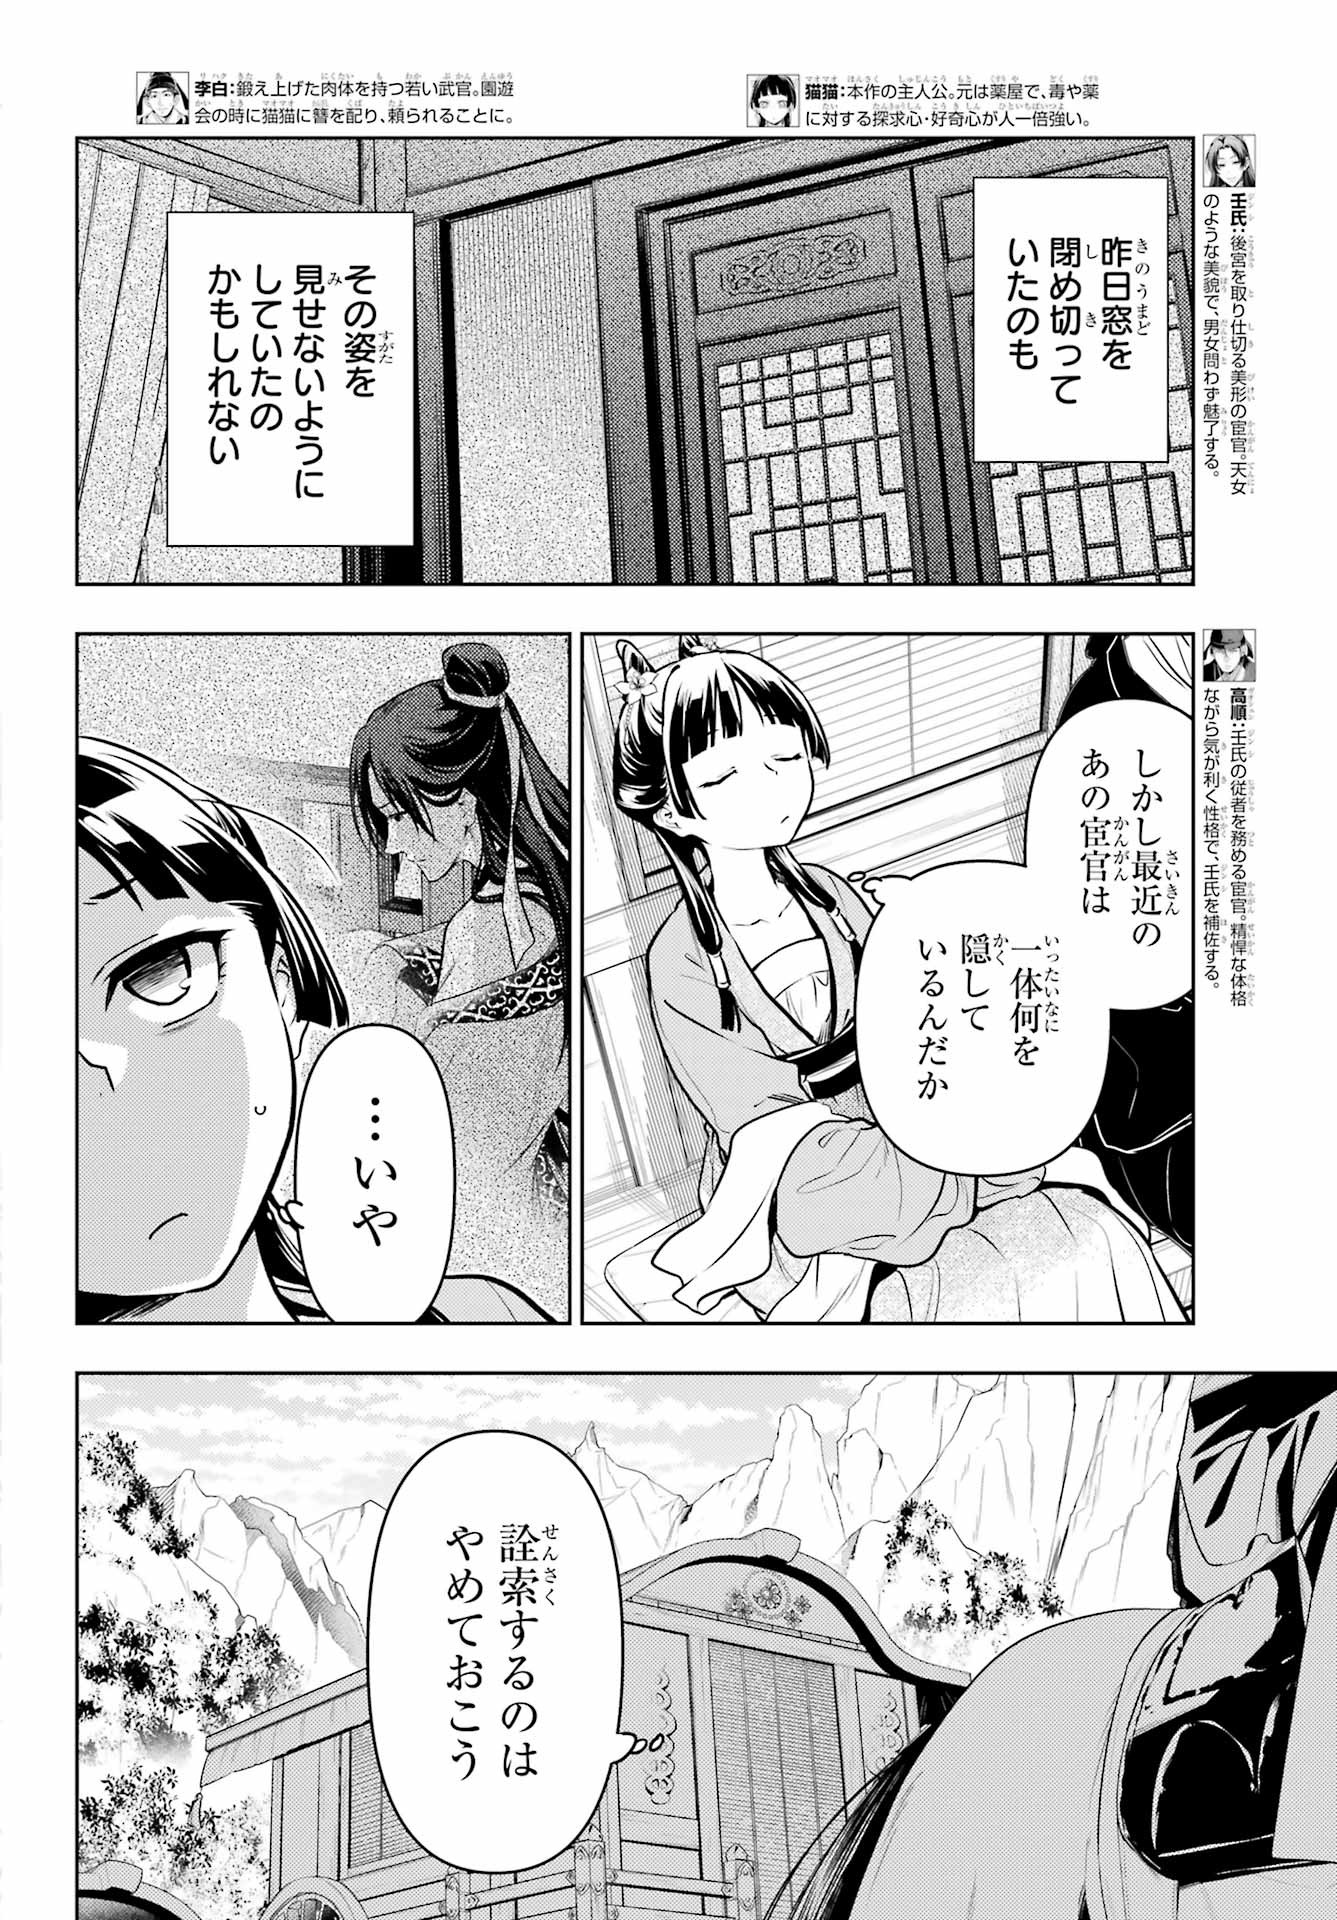 Kusuriya no Hitorigoto - Chapter 61 - Page 2